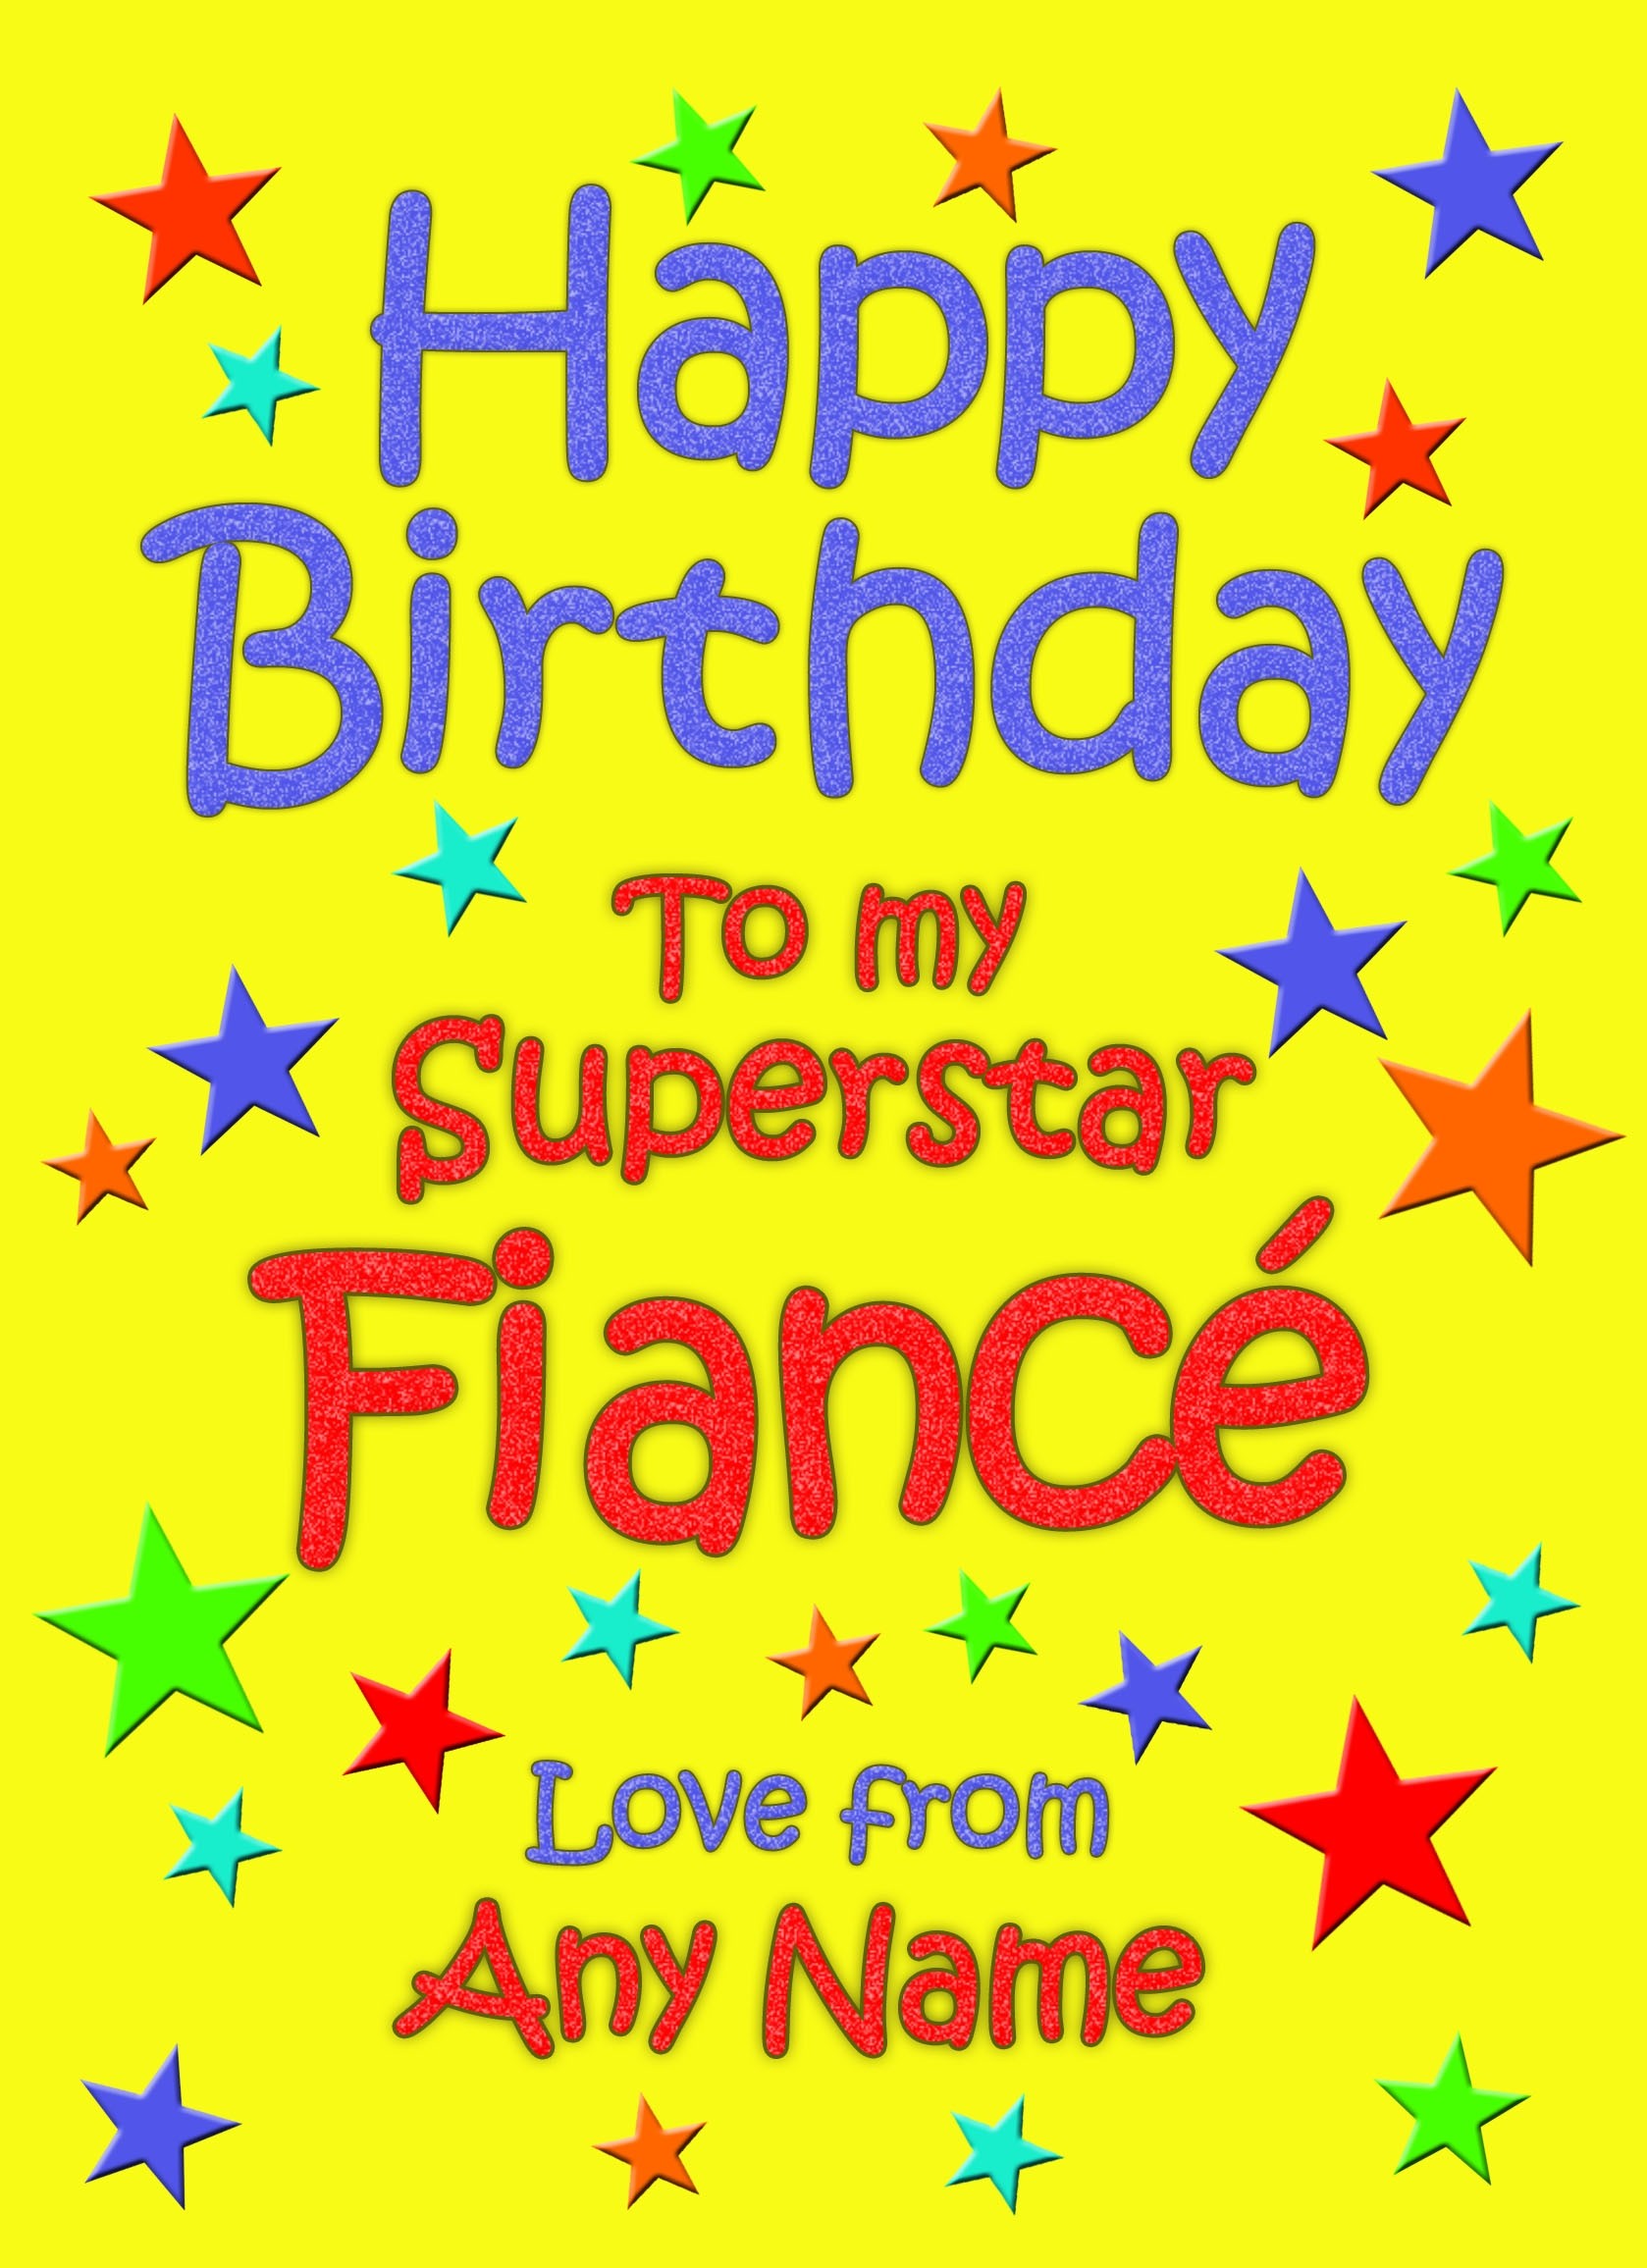 Personalised Fiance Birthday Card (Yellow)